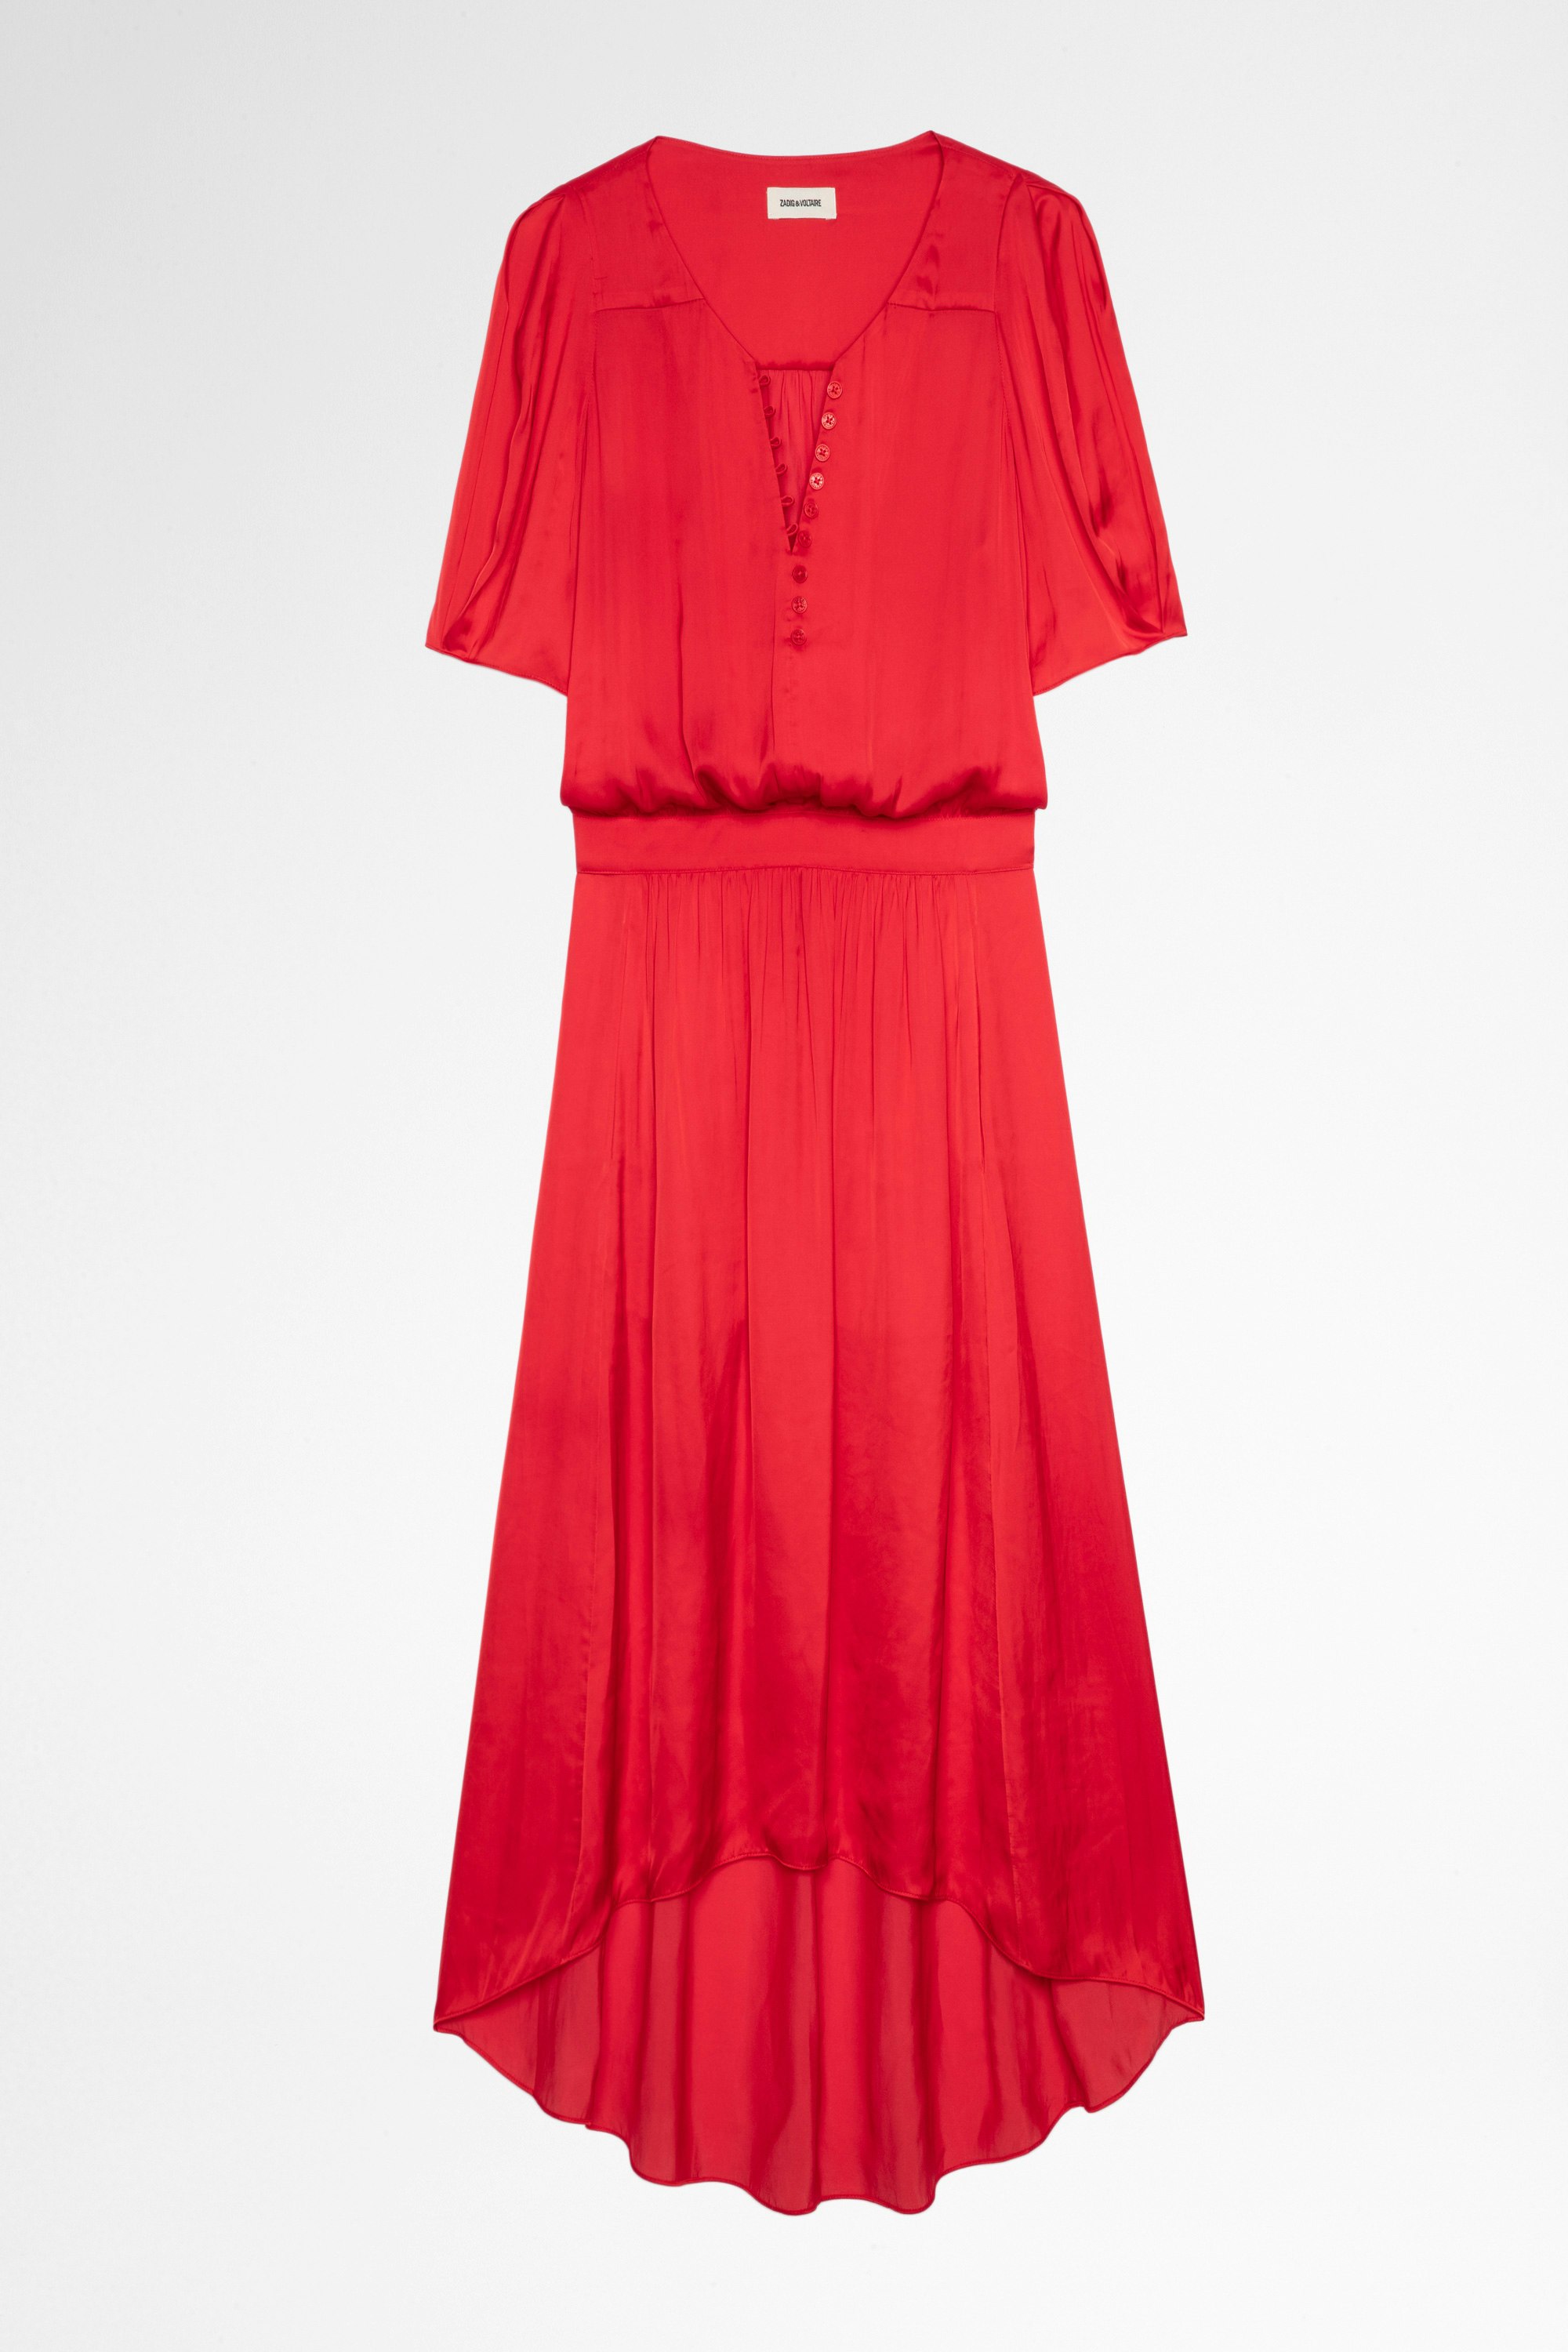 Vestido Ridge Satin Vestido rojo asimétrico de satén para mujer